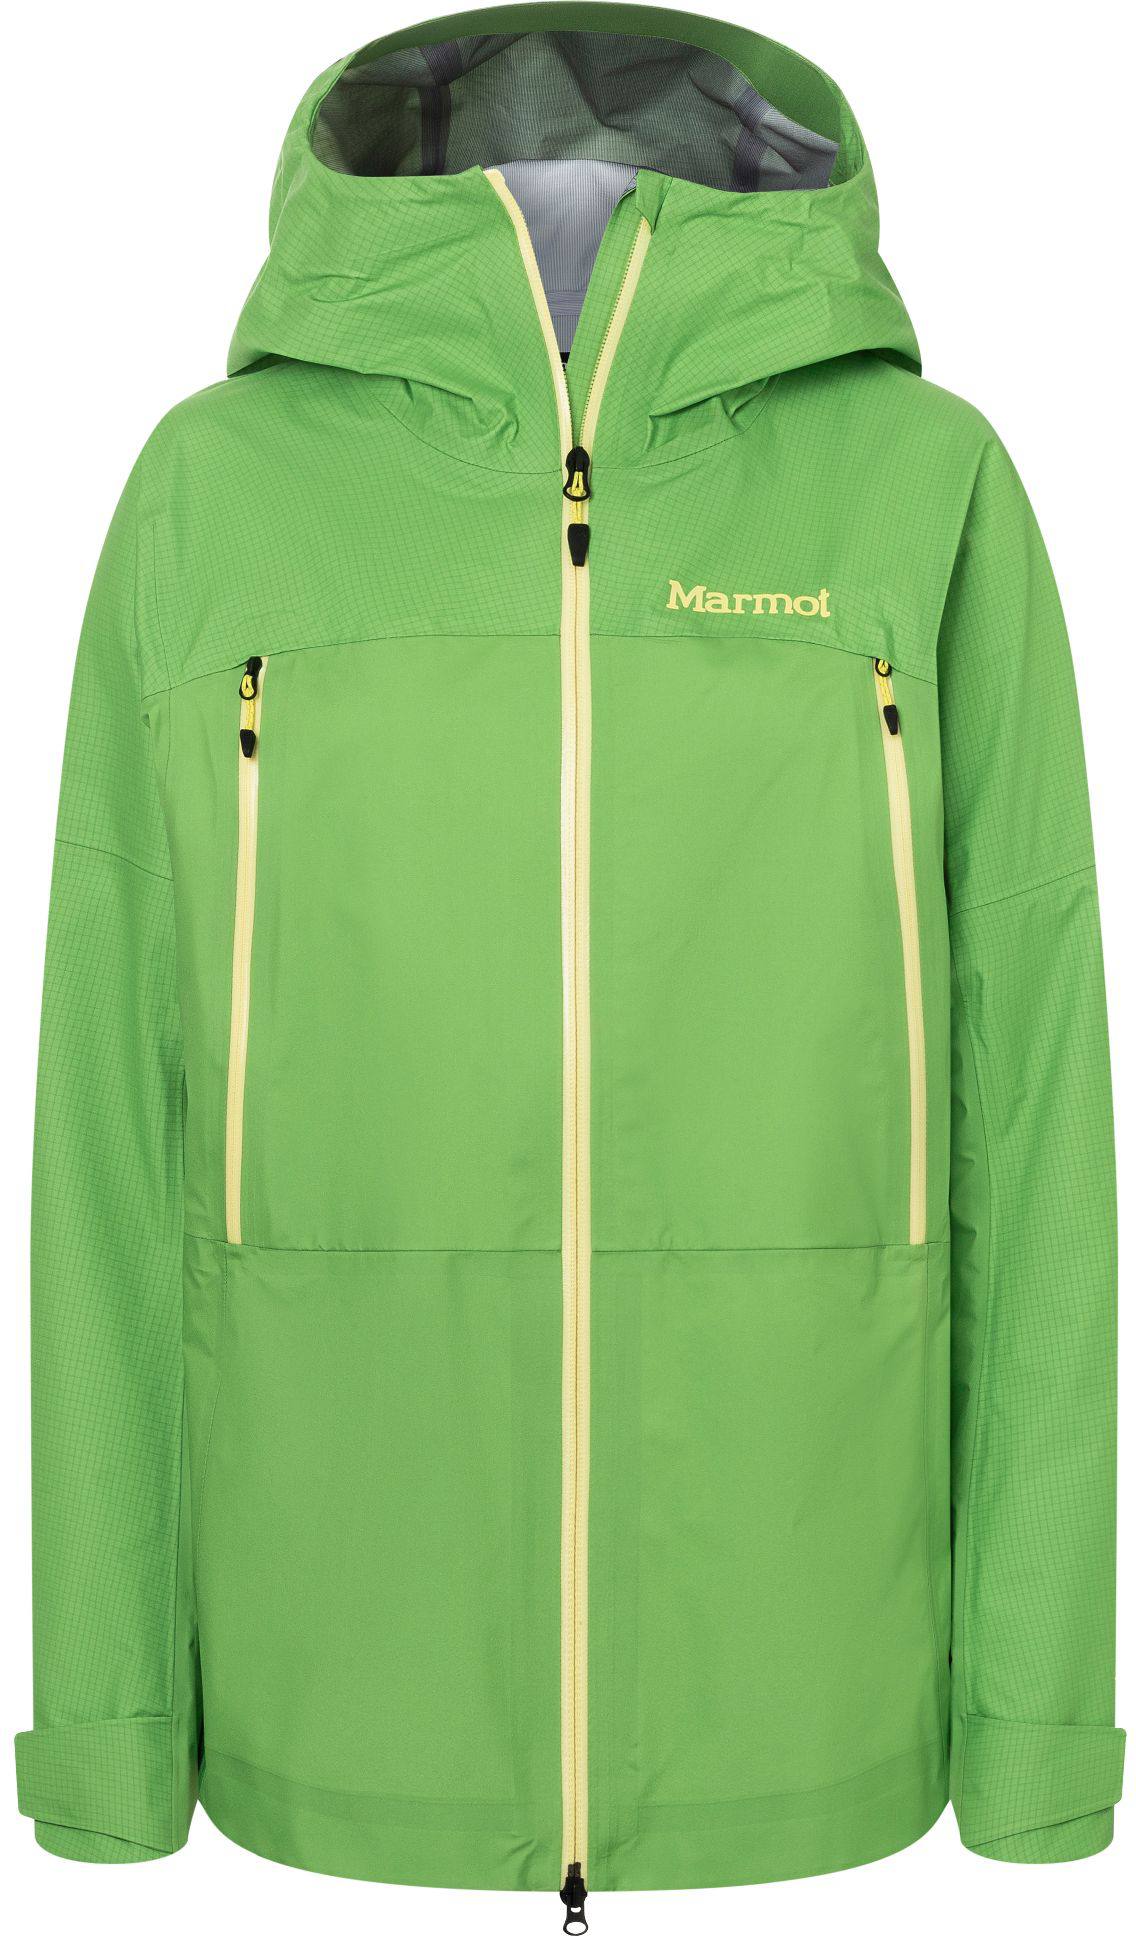 Marmot Women’s Mitre Peak Jacket